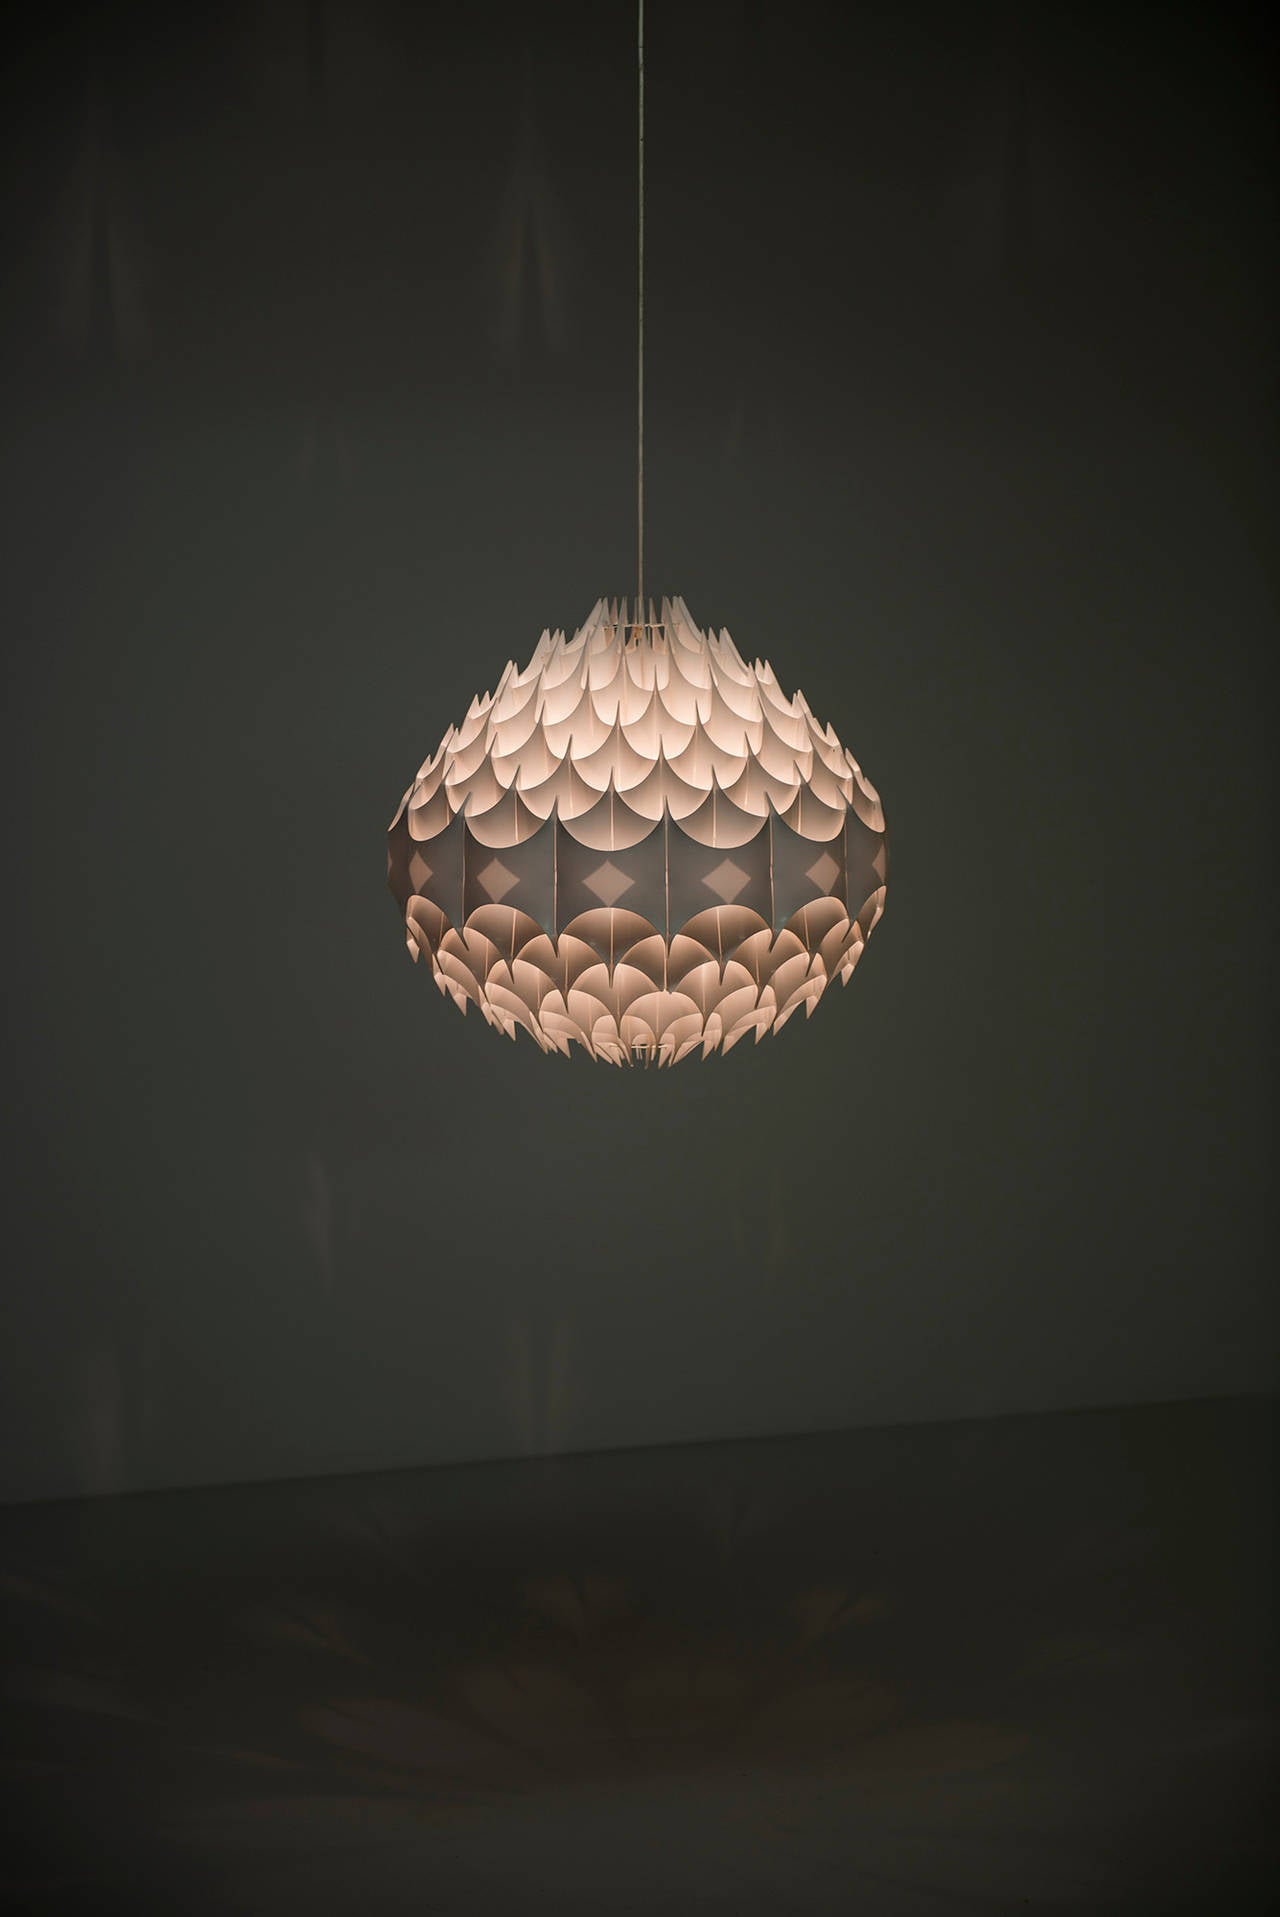 Plastic Havlova Milanda Rhythmic ceiling lamp by Vest in Austria